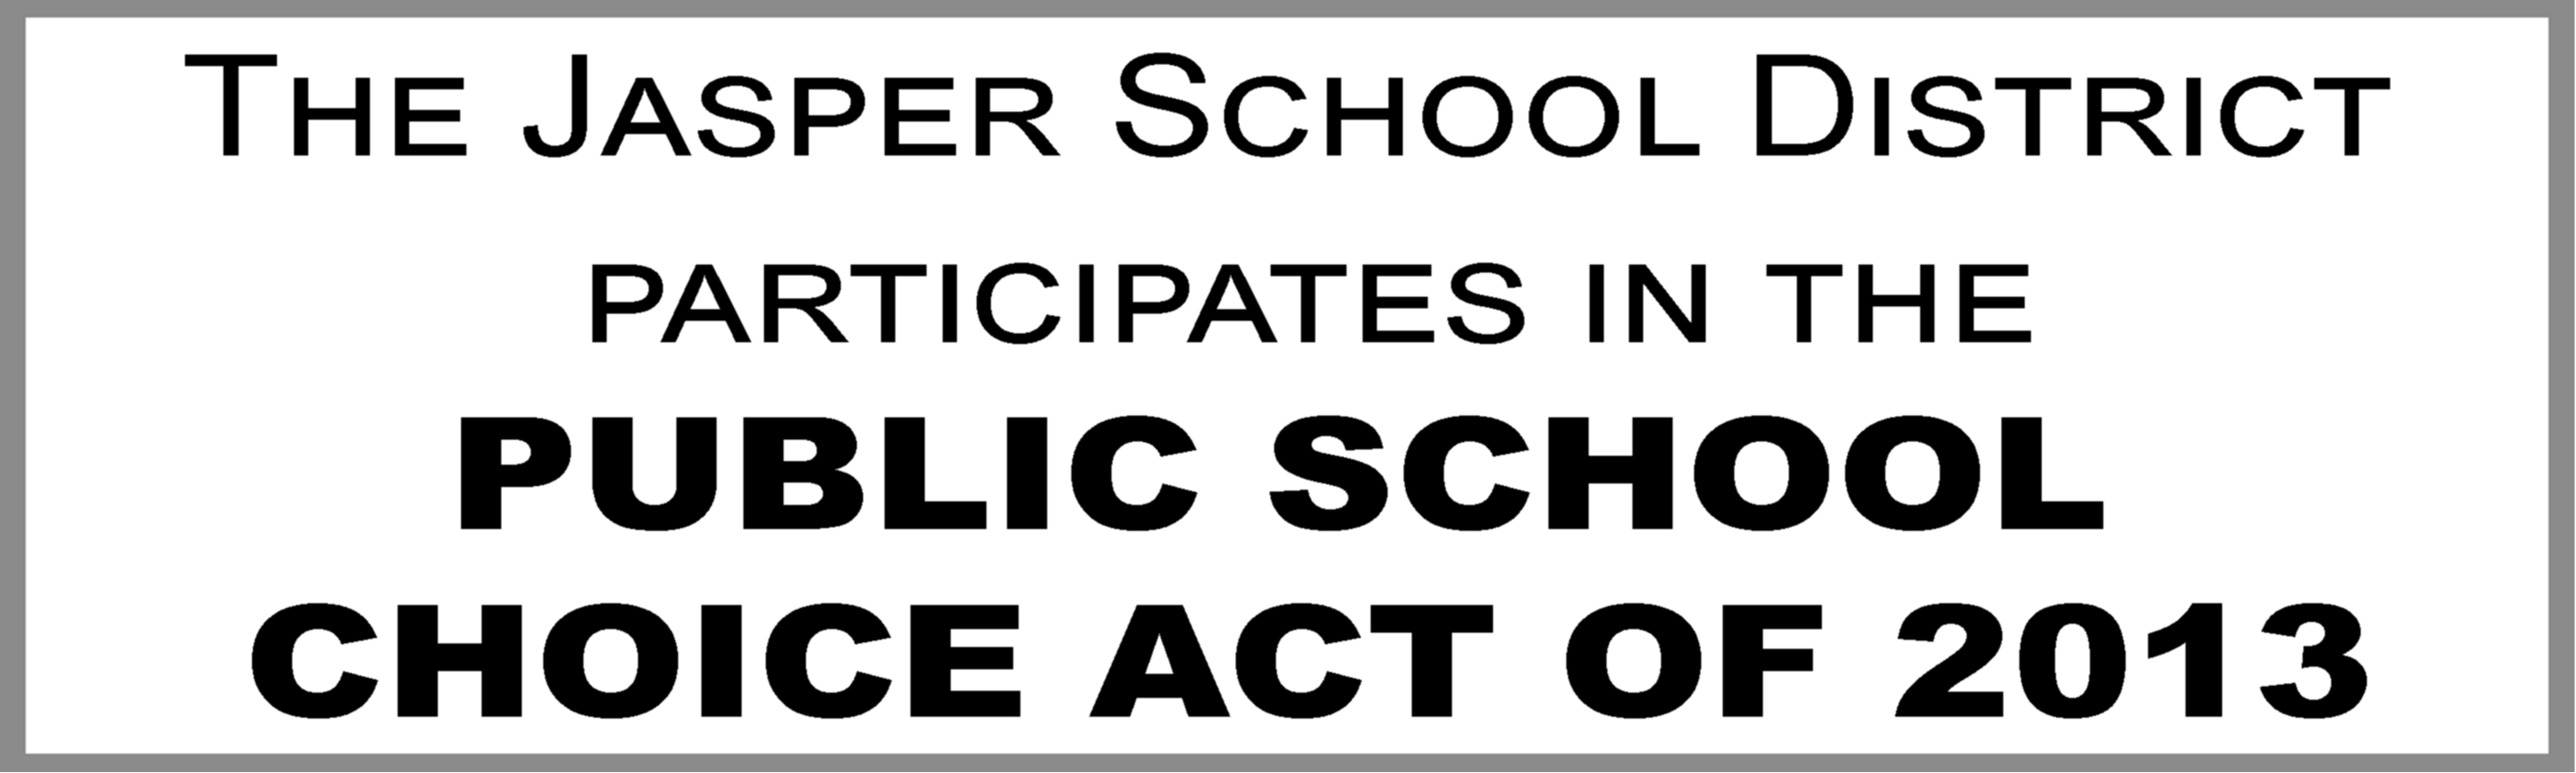 Public School Choice Act of 2013 Button